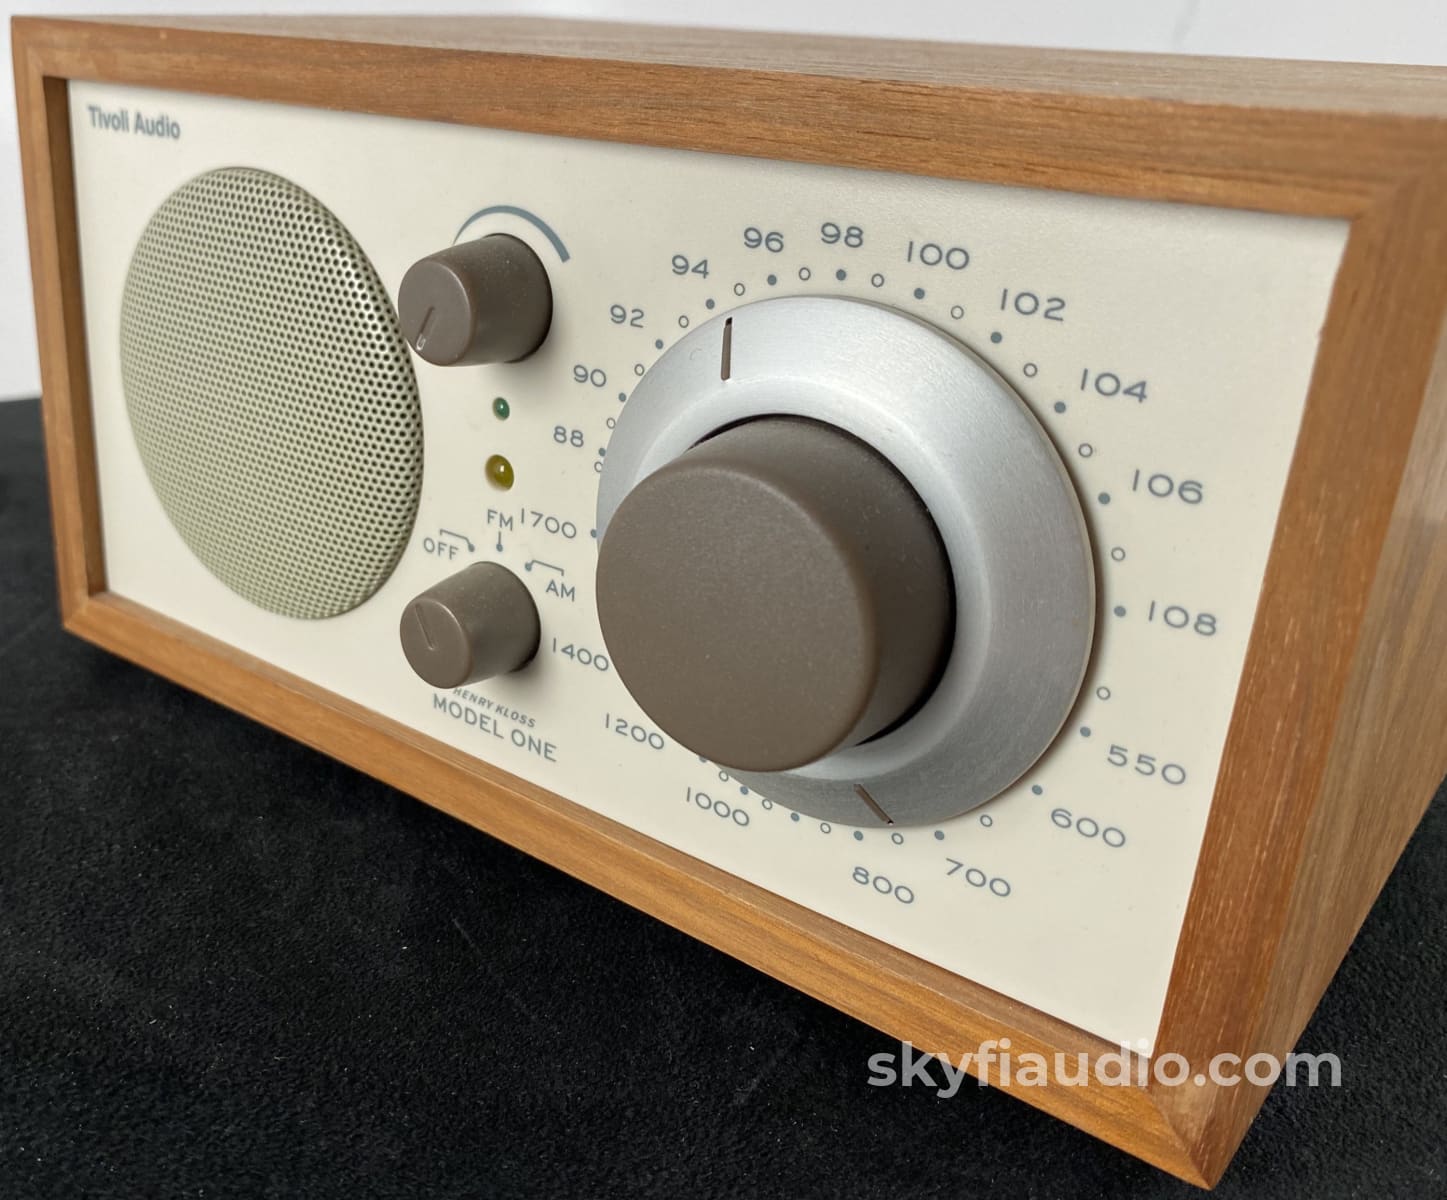 Tivoli Audio Henry Kloss Model One Fm Radio Tuner